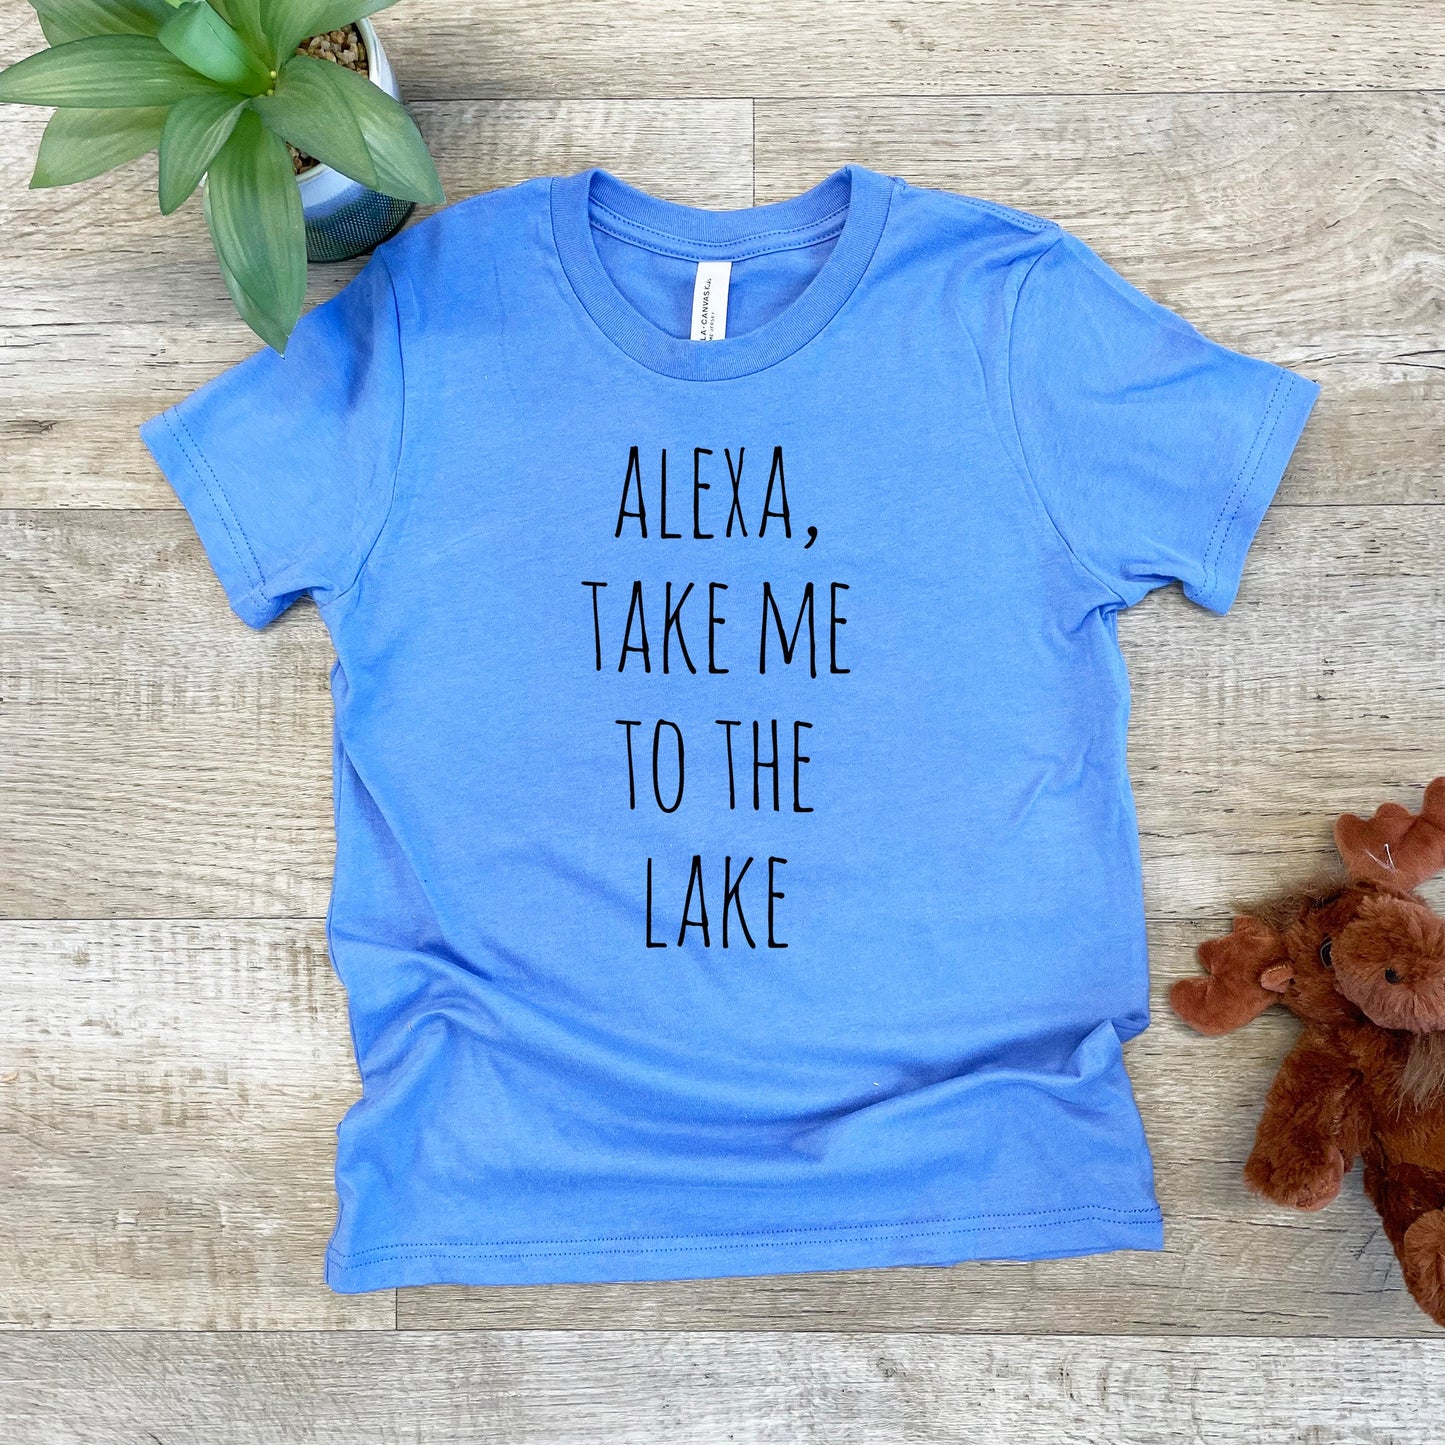 Alexa, Take Me To The Lake - Kid's Tee - Columbia Blue or Lavender